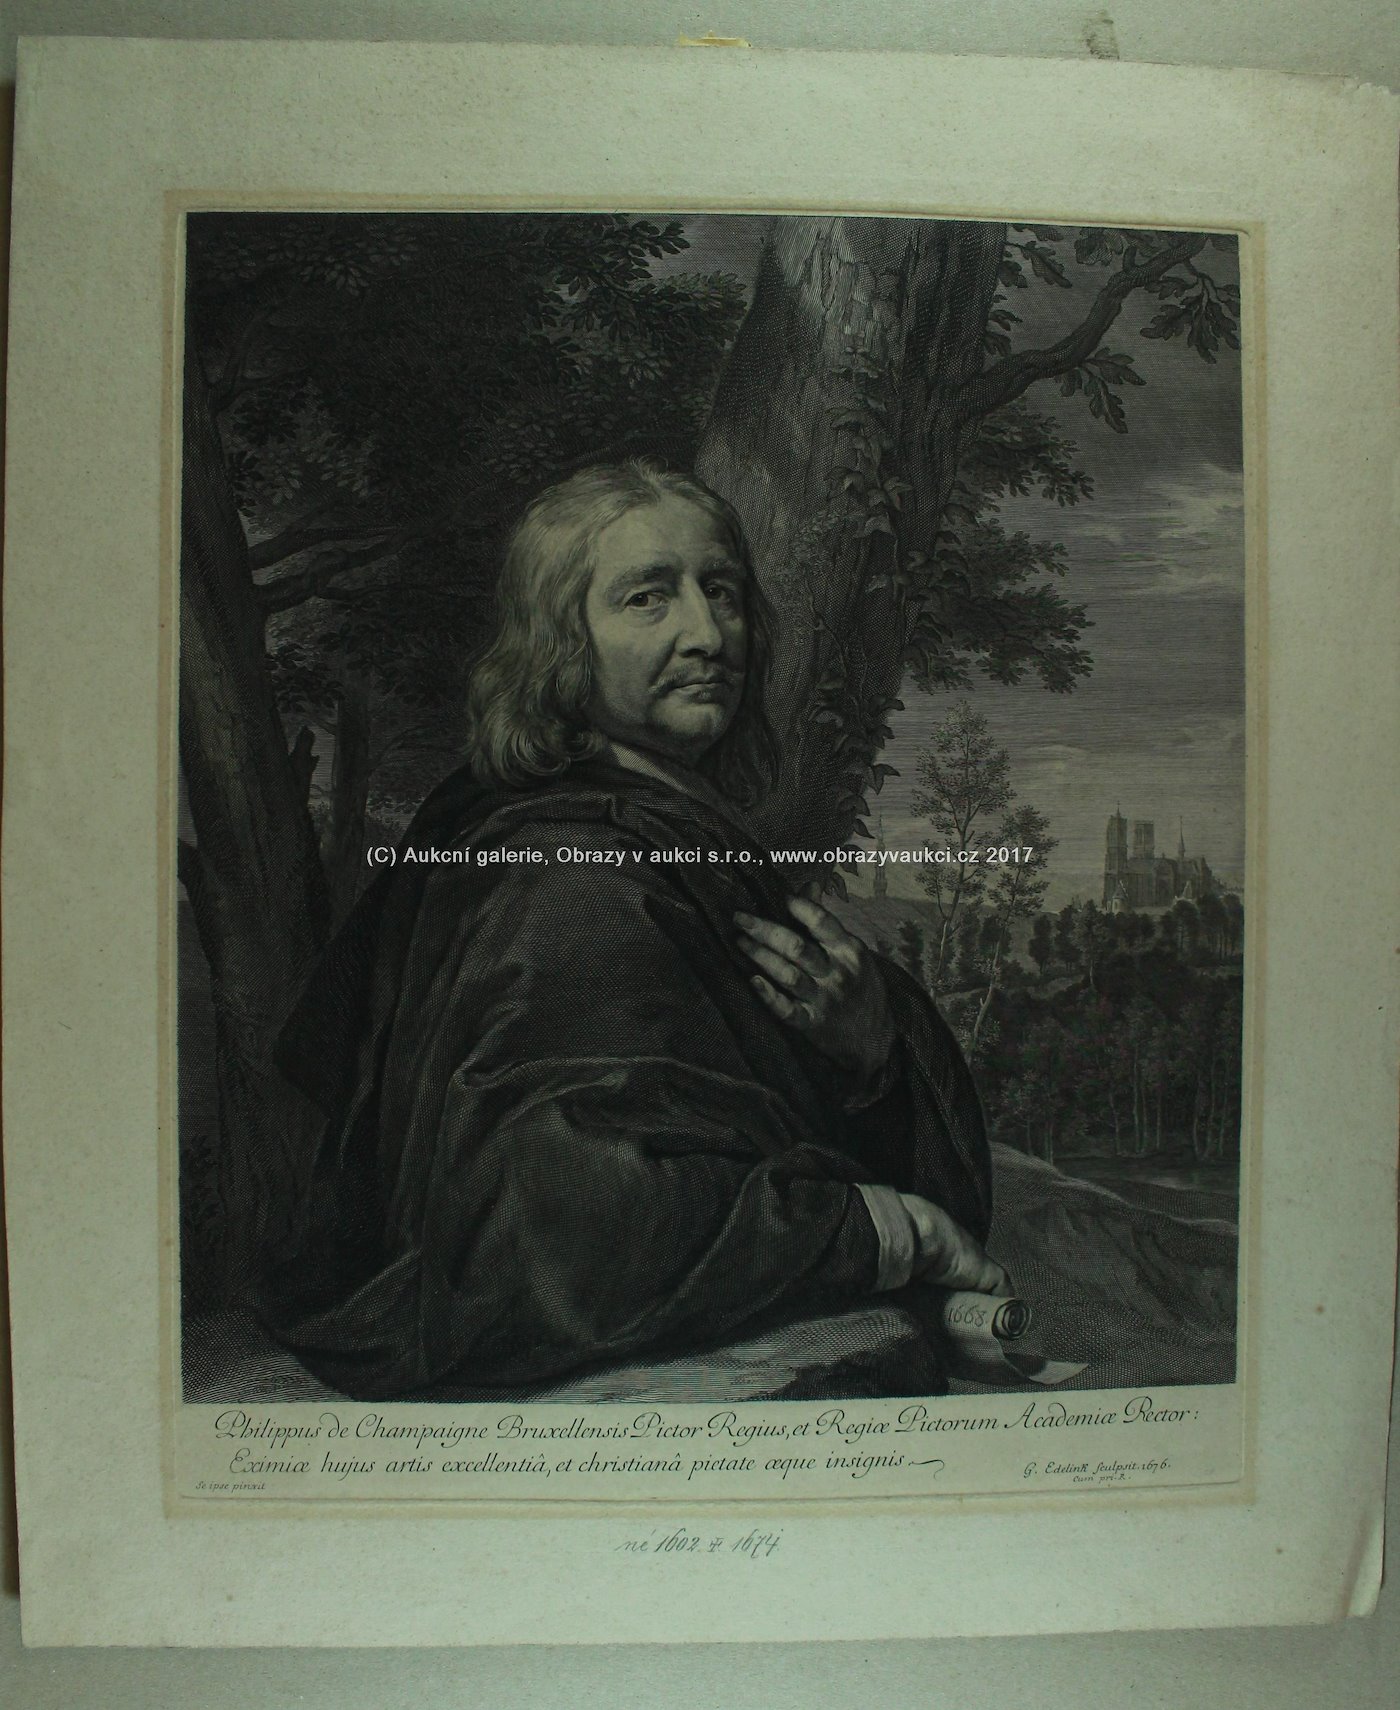 Gerard Edelinck - Phillip de Champaigne, rektor královské malířské akademie v Bruselu (1602-1674)